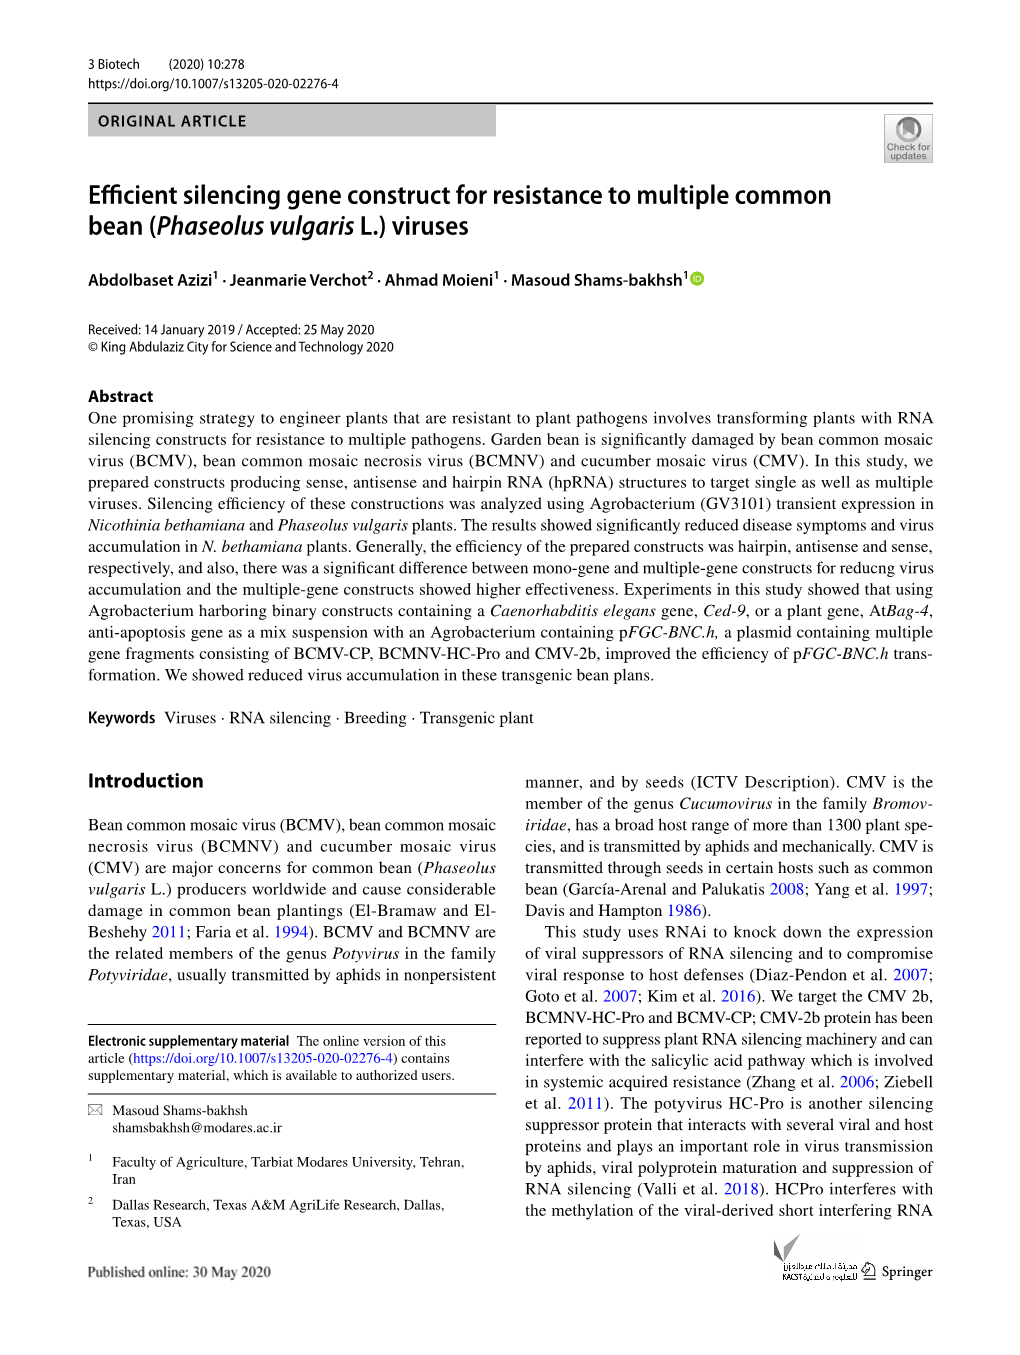 Efficient Silencing Gene Construct for Resistance to Multiple Common Bean (Phaseolus Vulgaris L.) Viruses